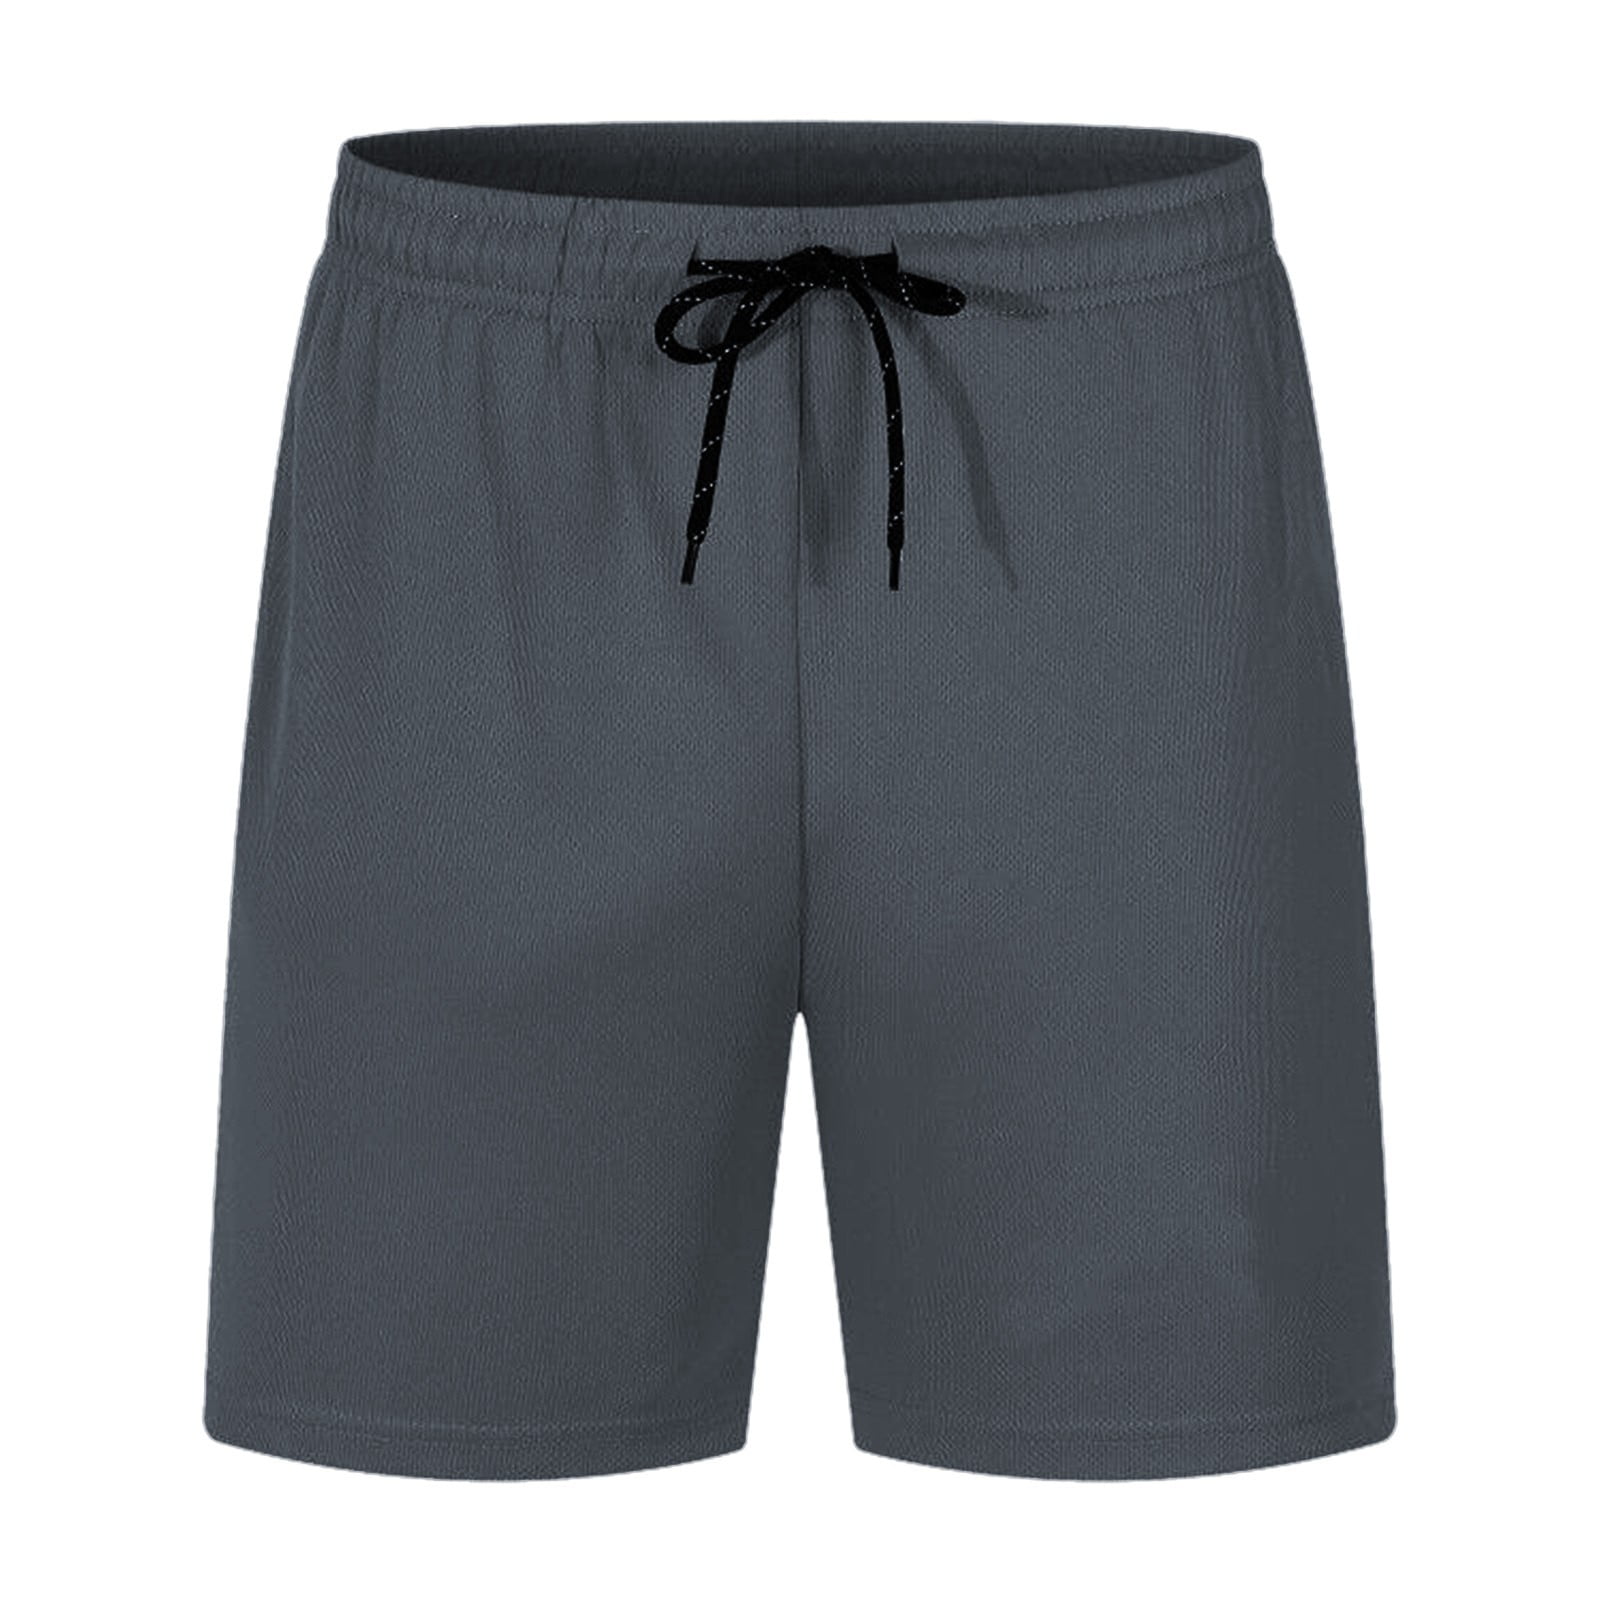 adviicd Basic Short Summer Fashionable Casual Shorts Mens Men's Shorts ...